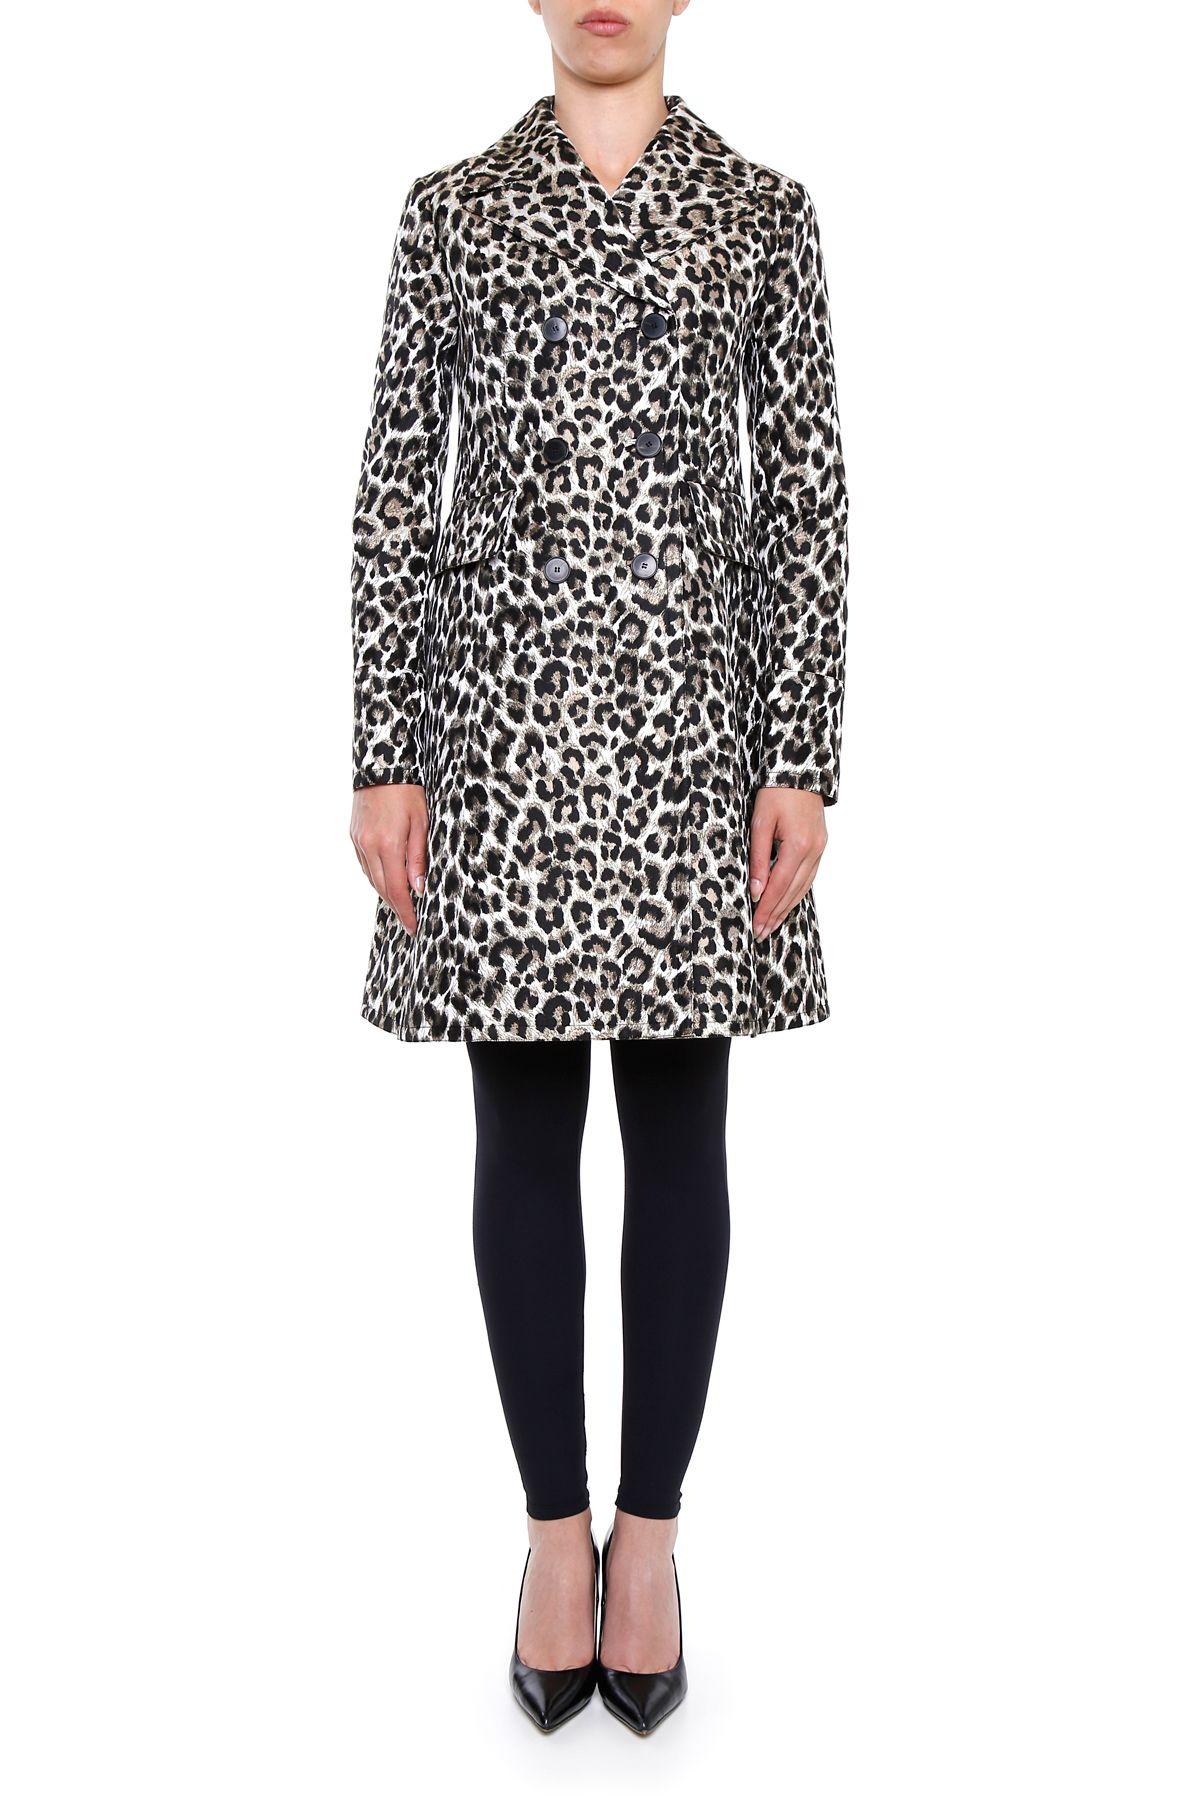 Dior Animal Print Coat In Marronbeige | ModeSens